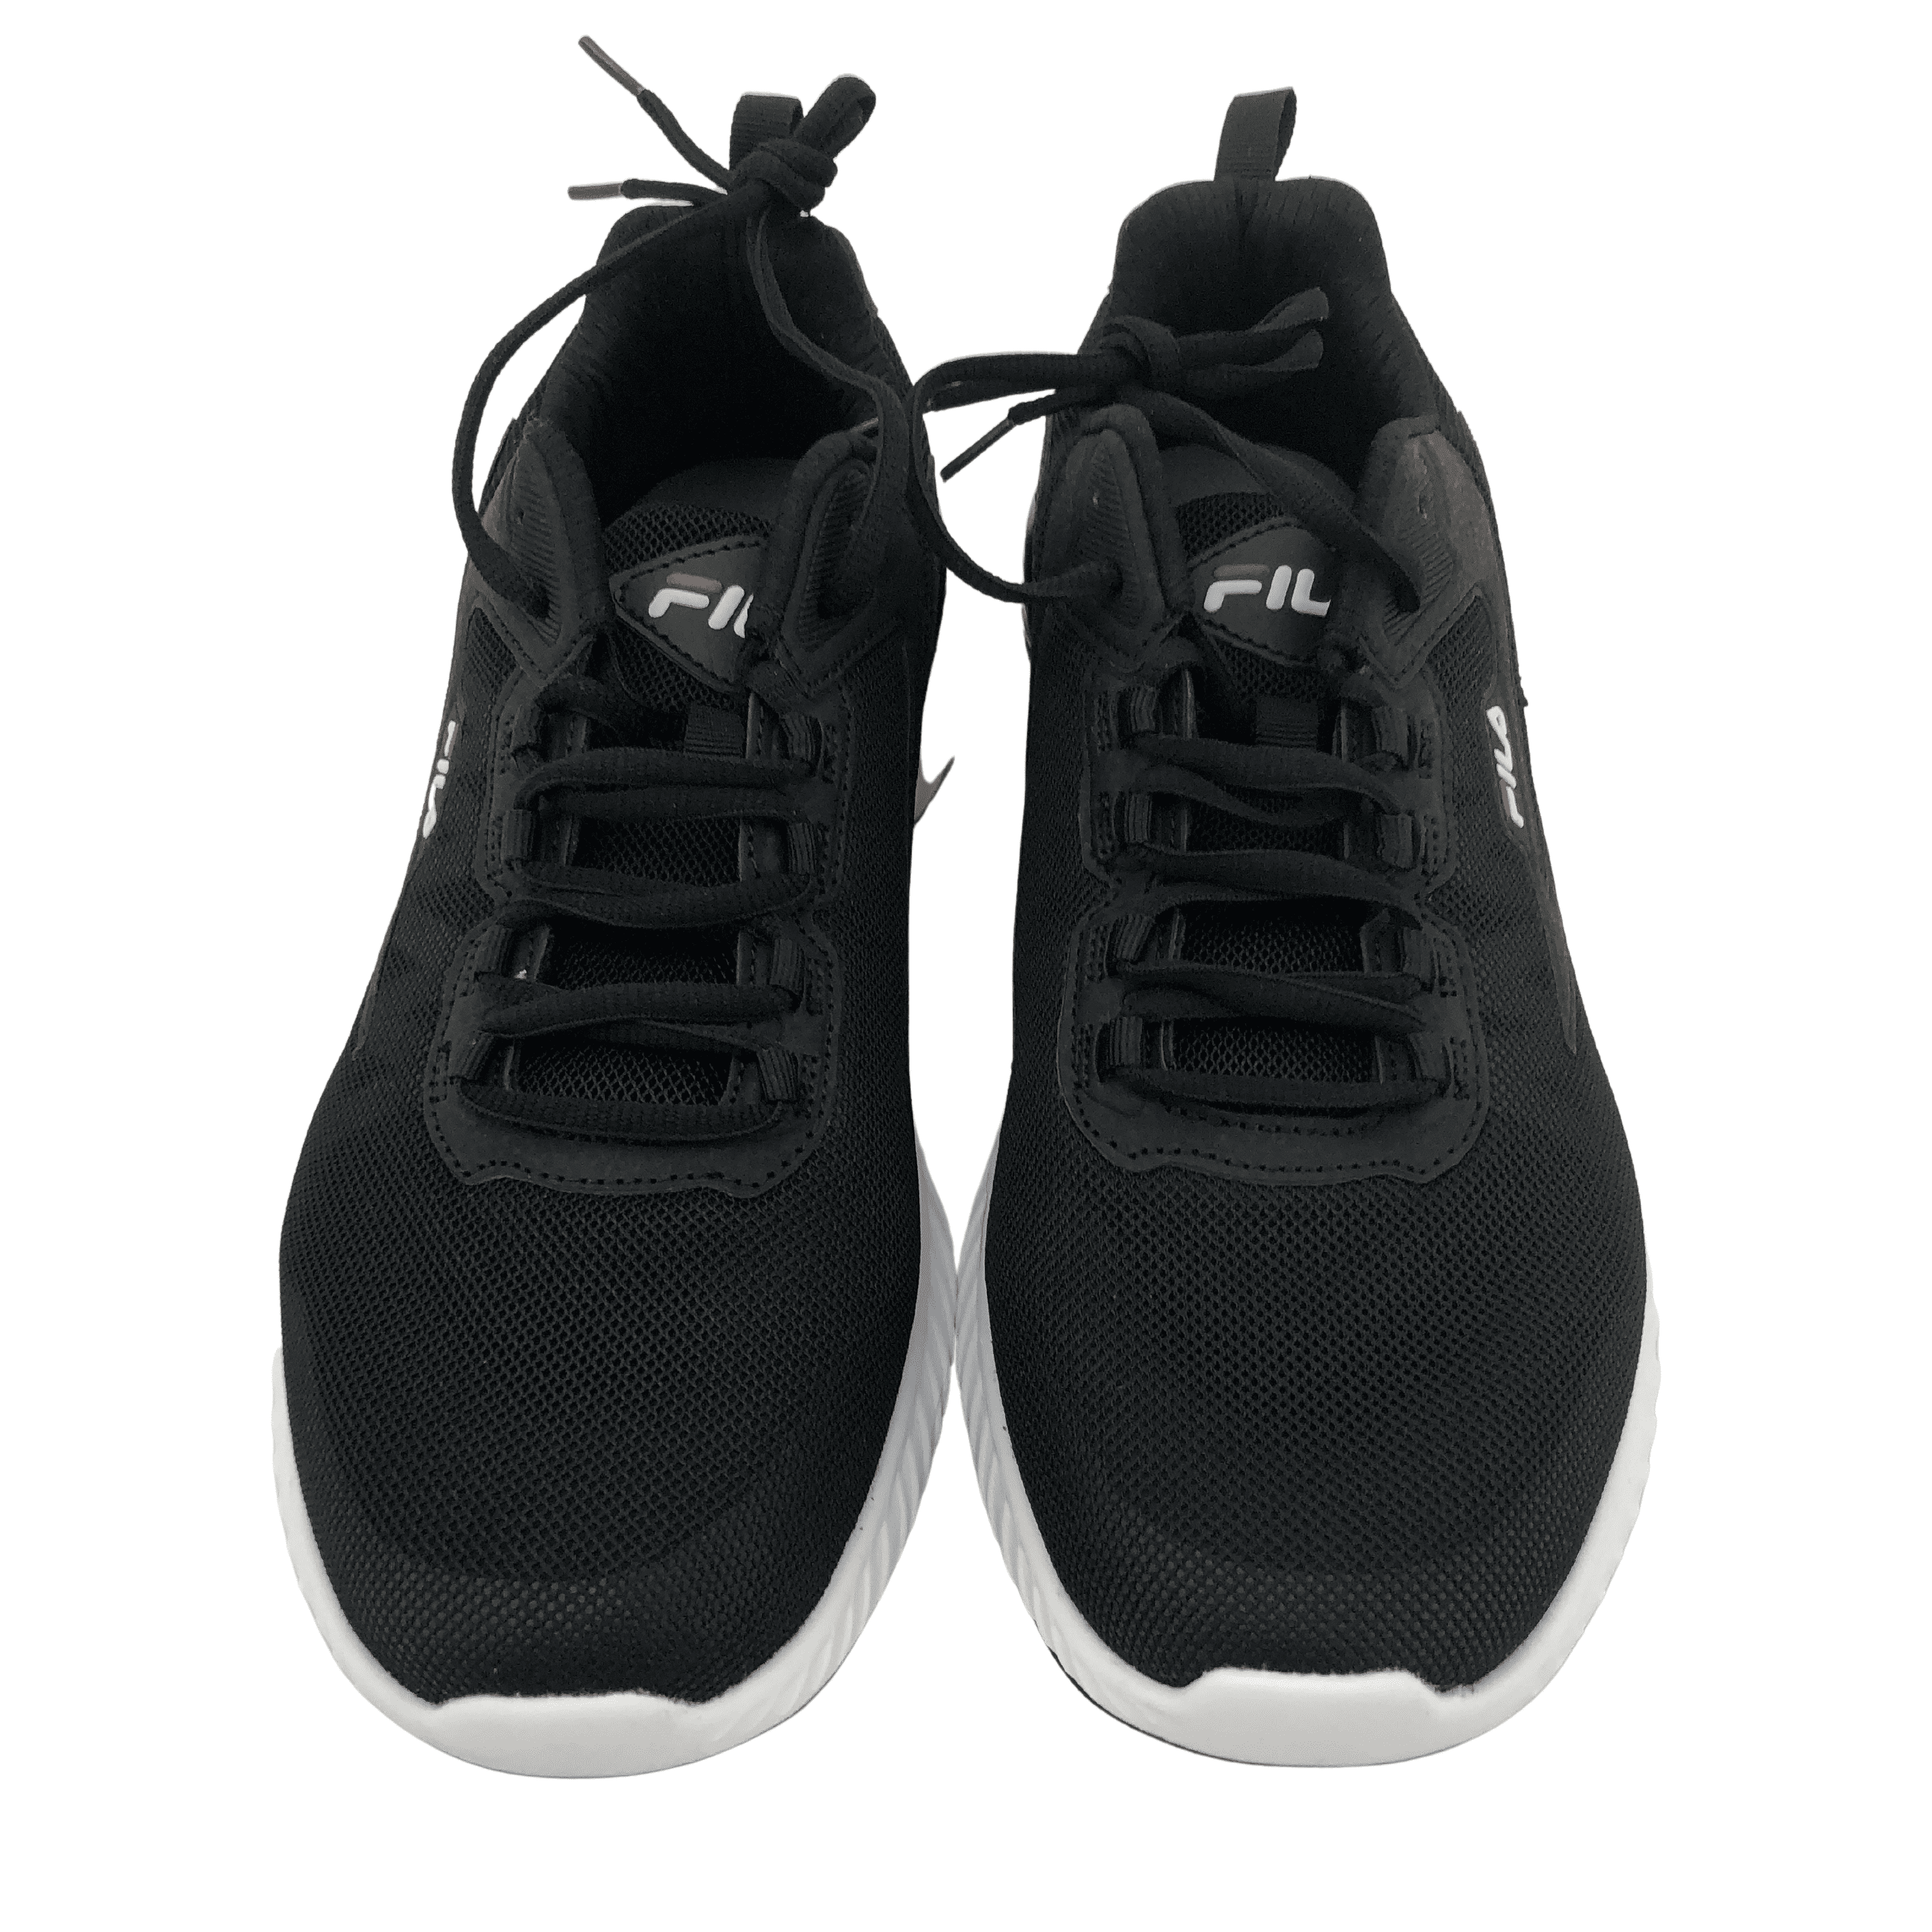 Fila Men's Running Shoes / Trazoros Energized 2 / Black / Size 11